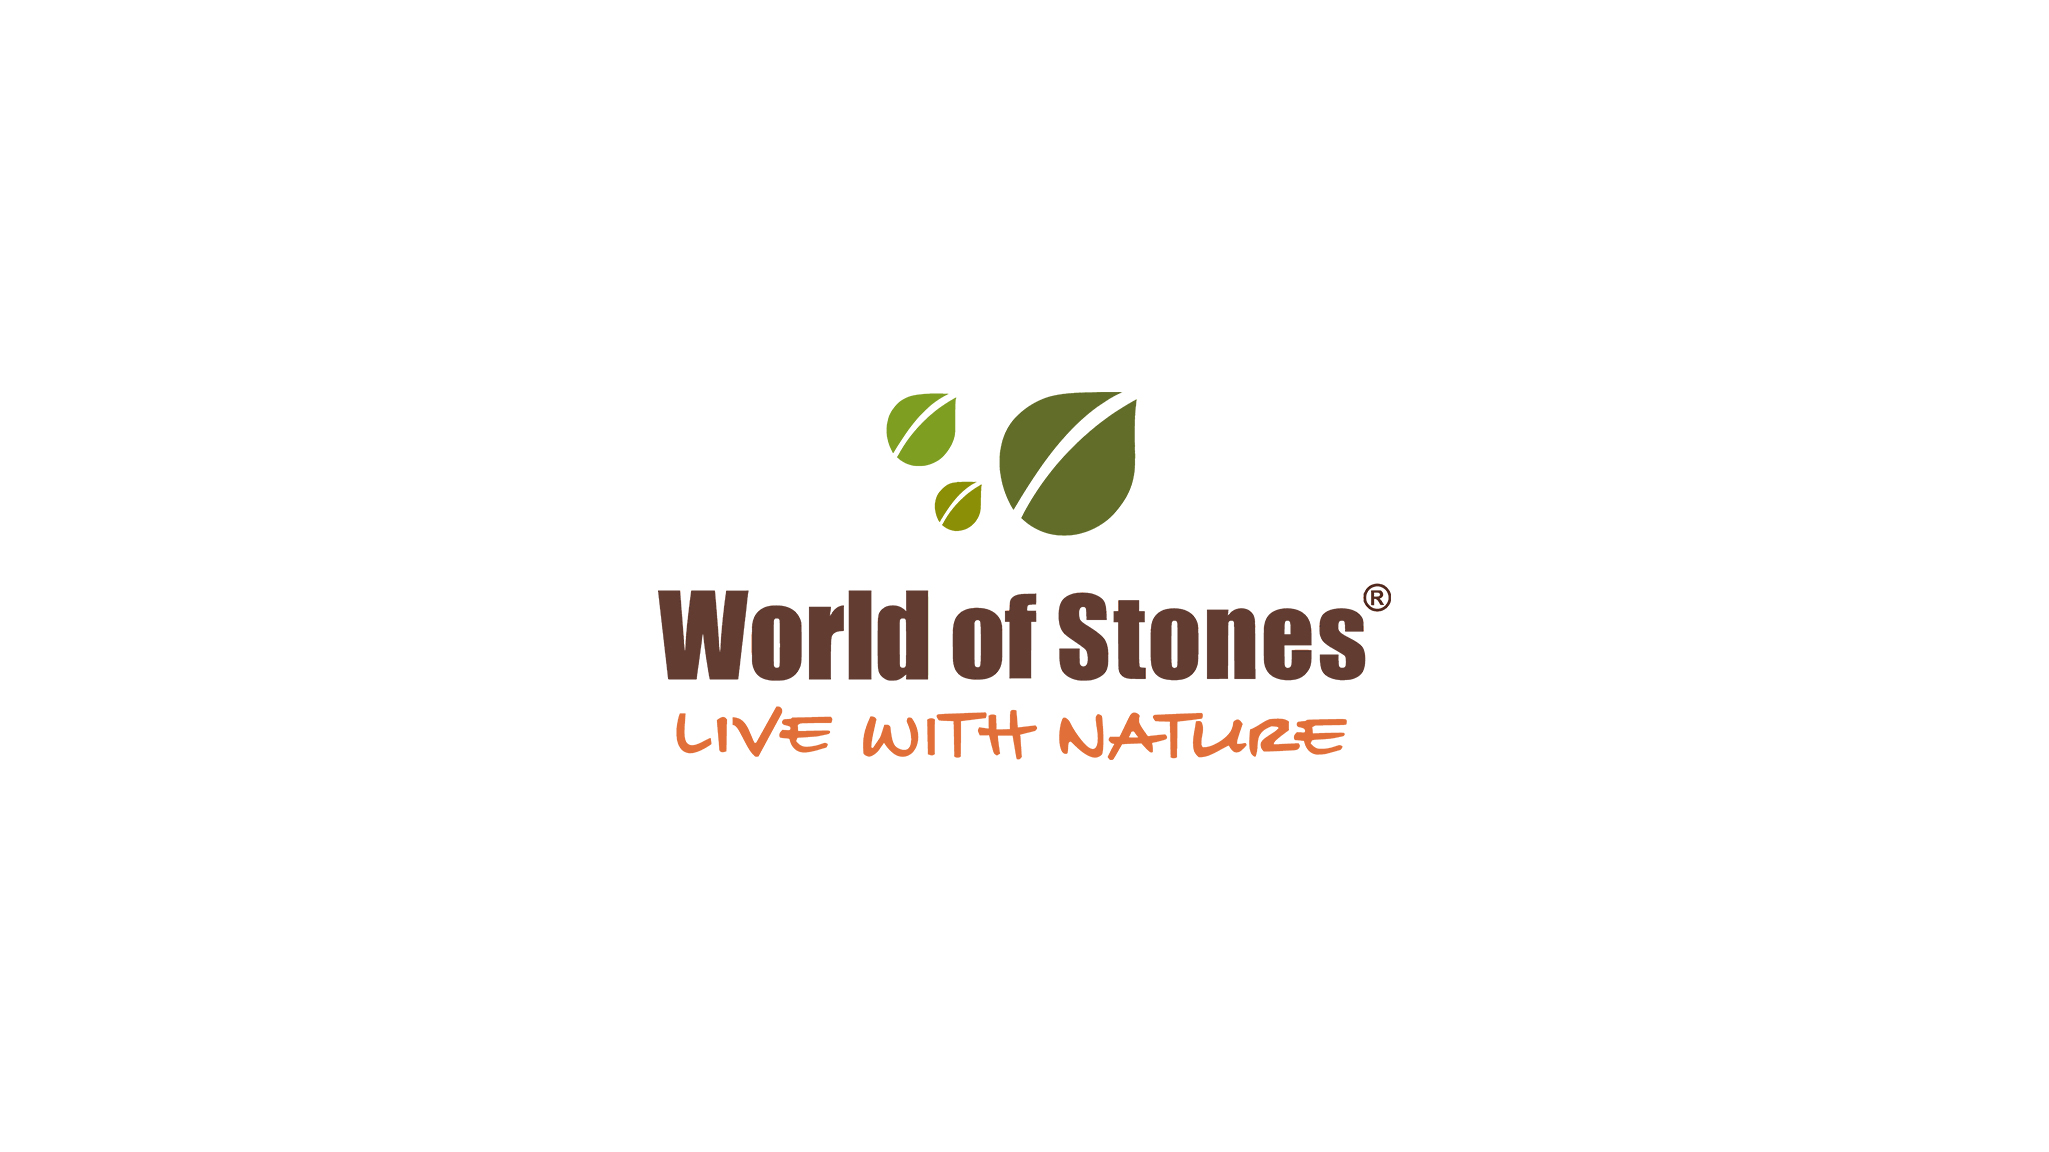 World Of Stones pvt ltd